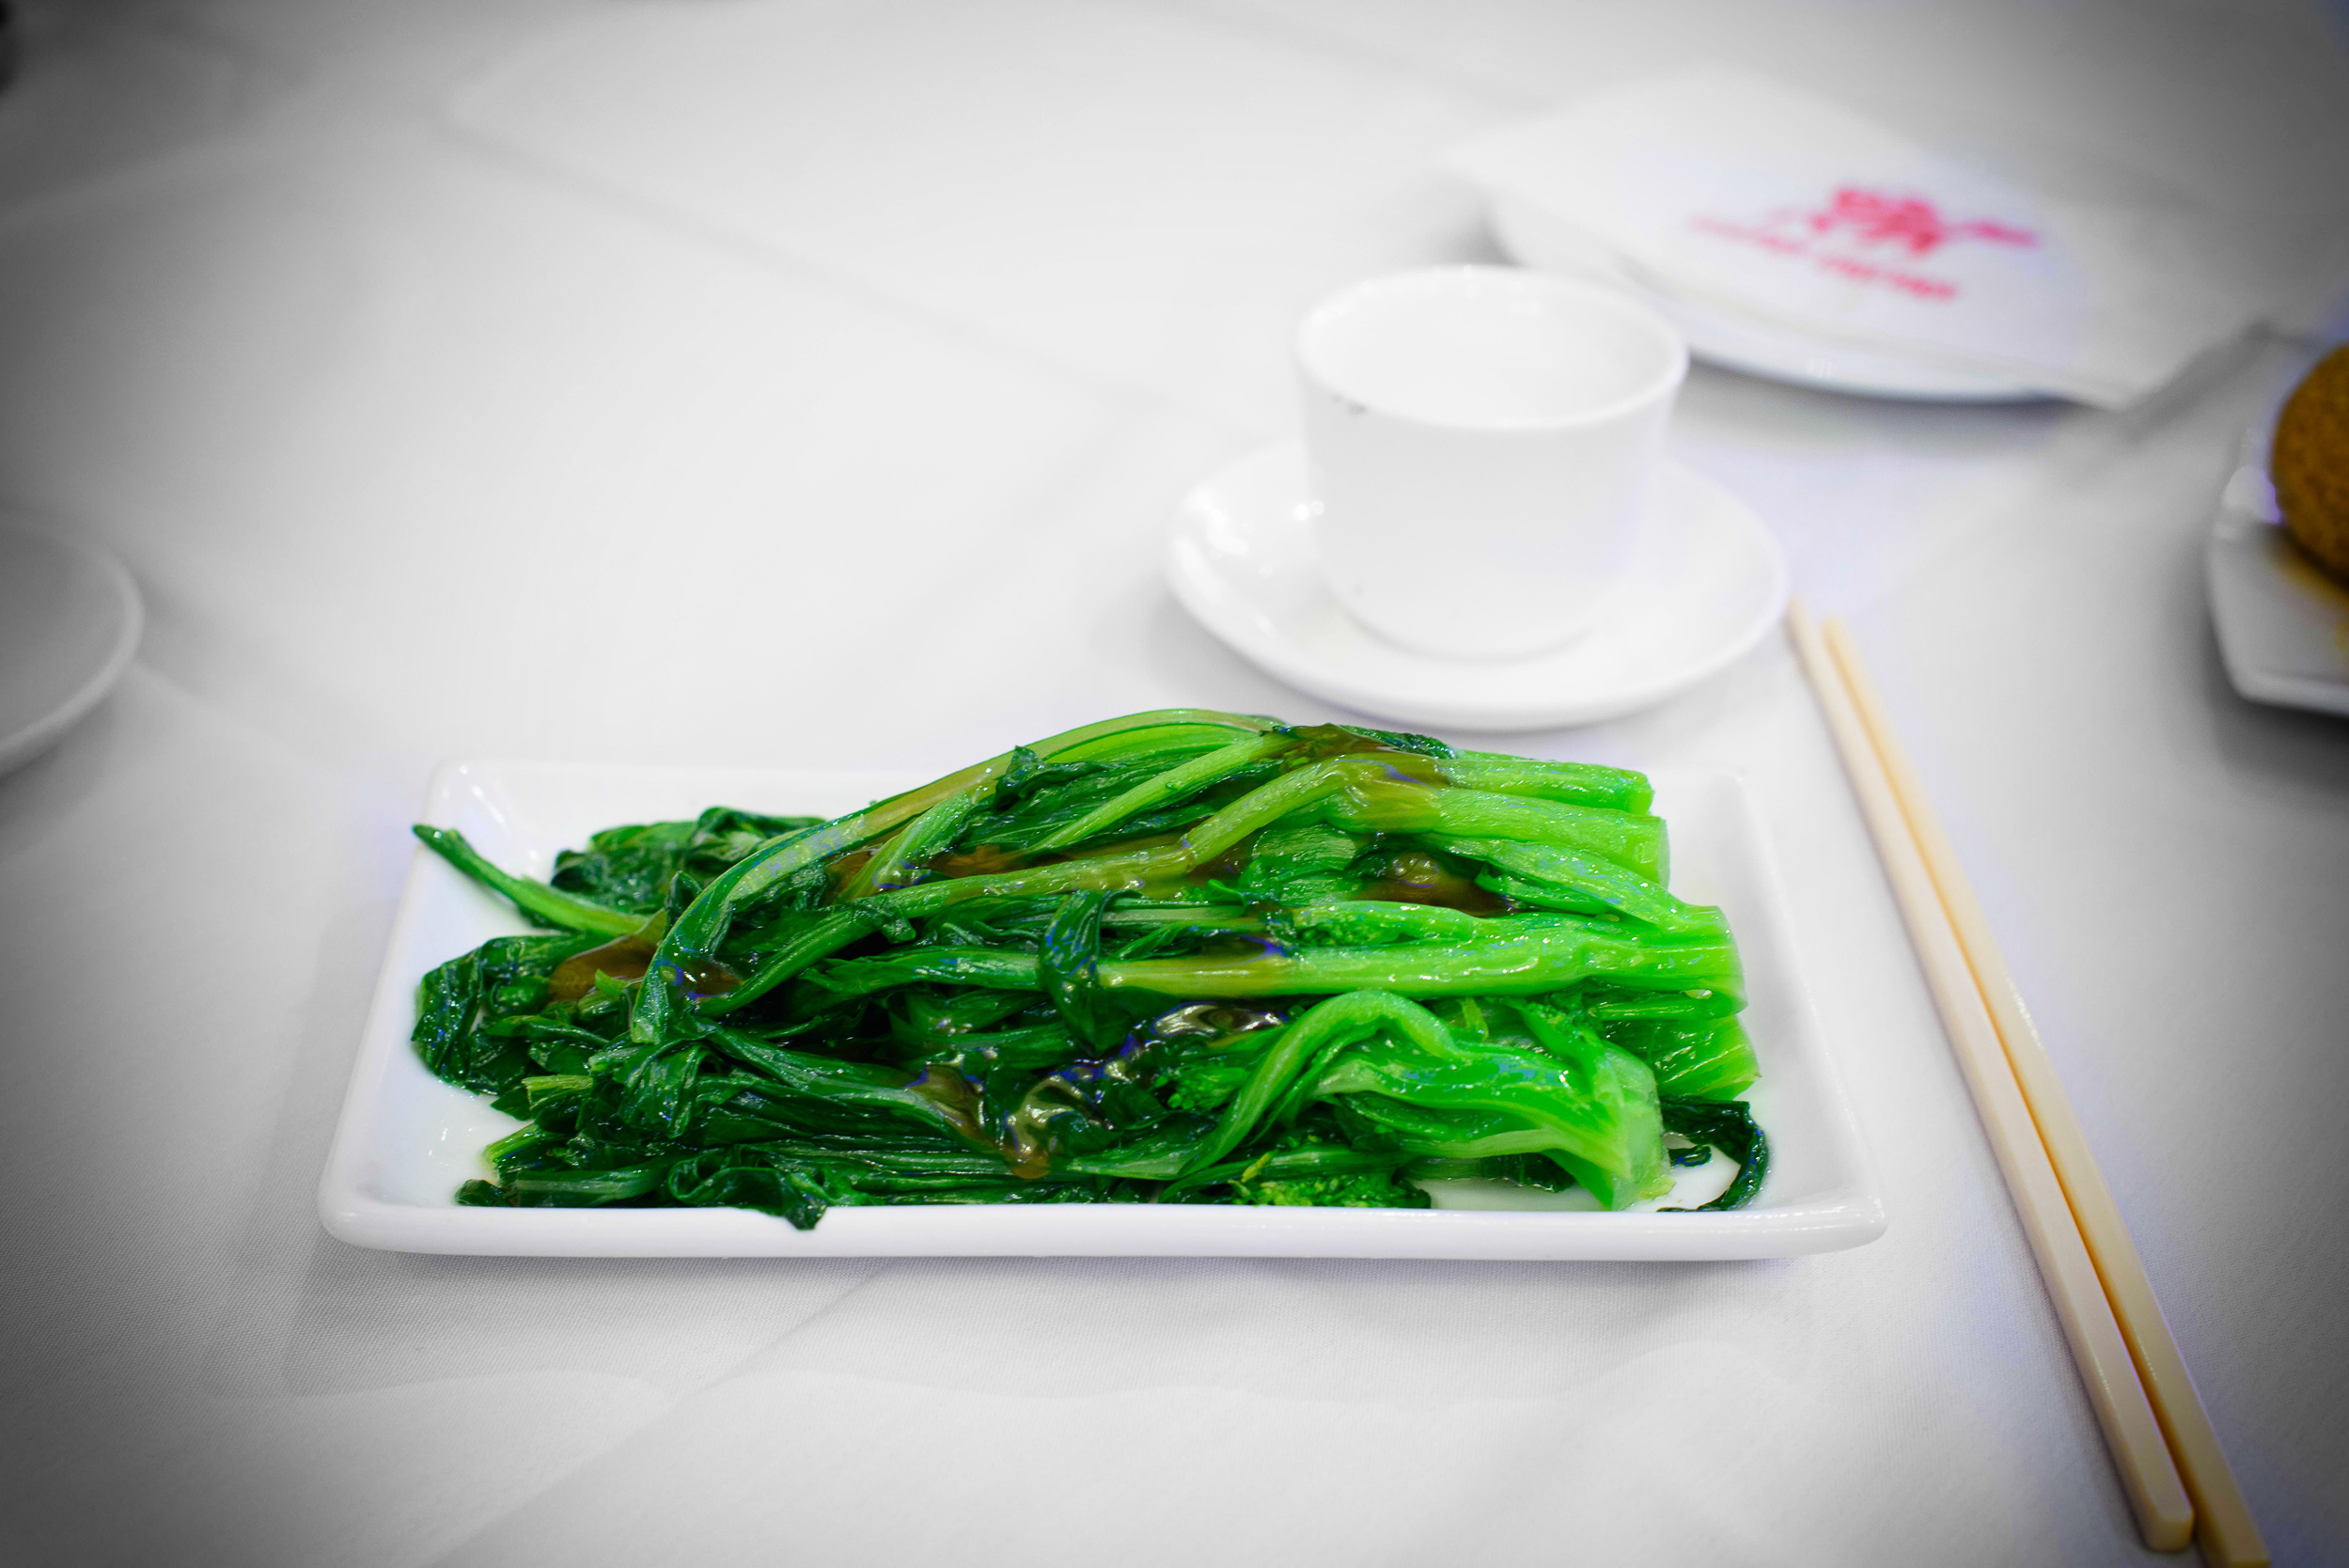 Sautéed Chinese broccoli